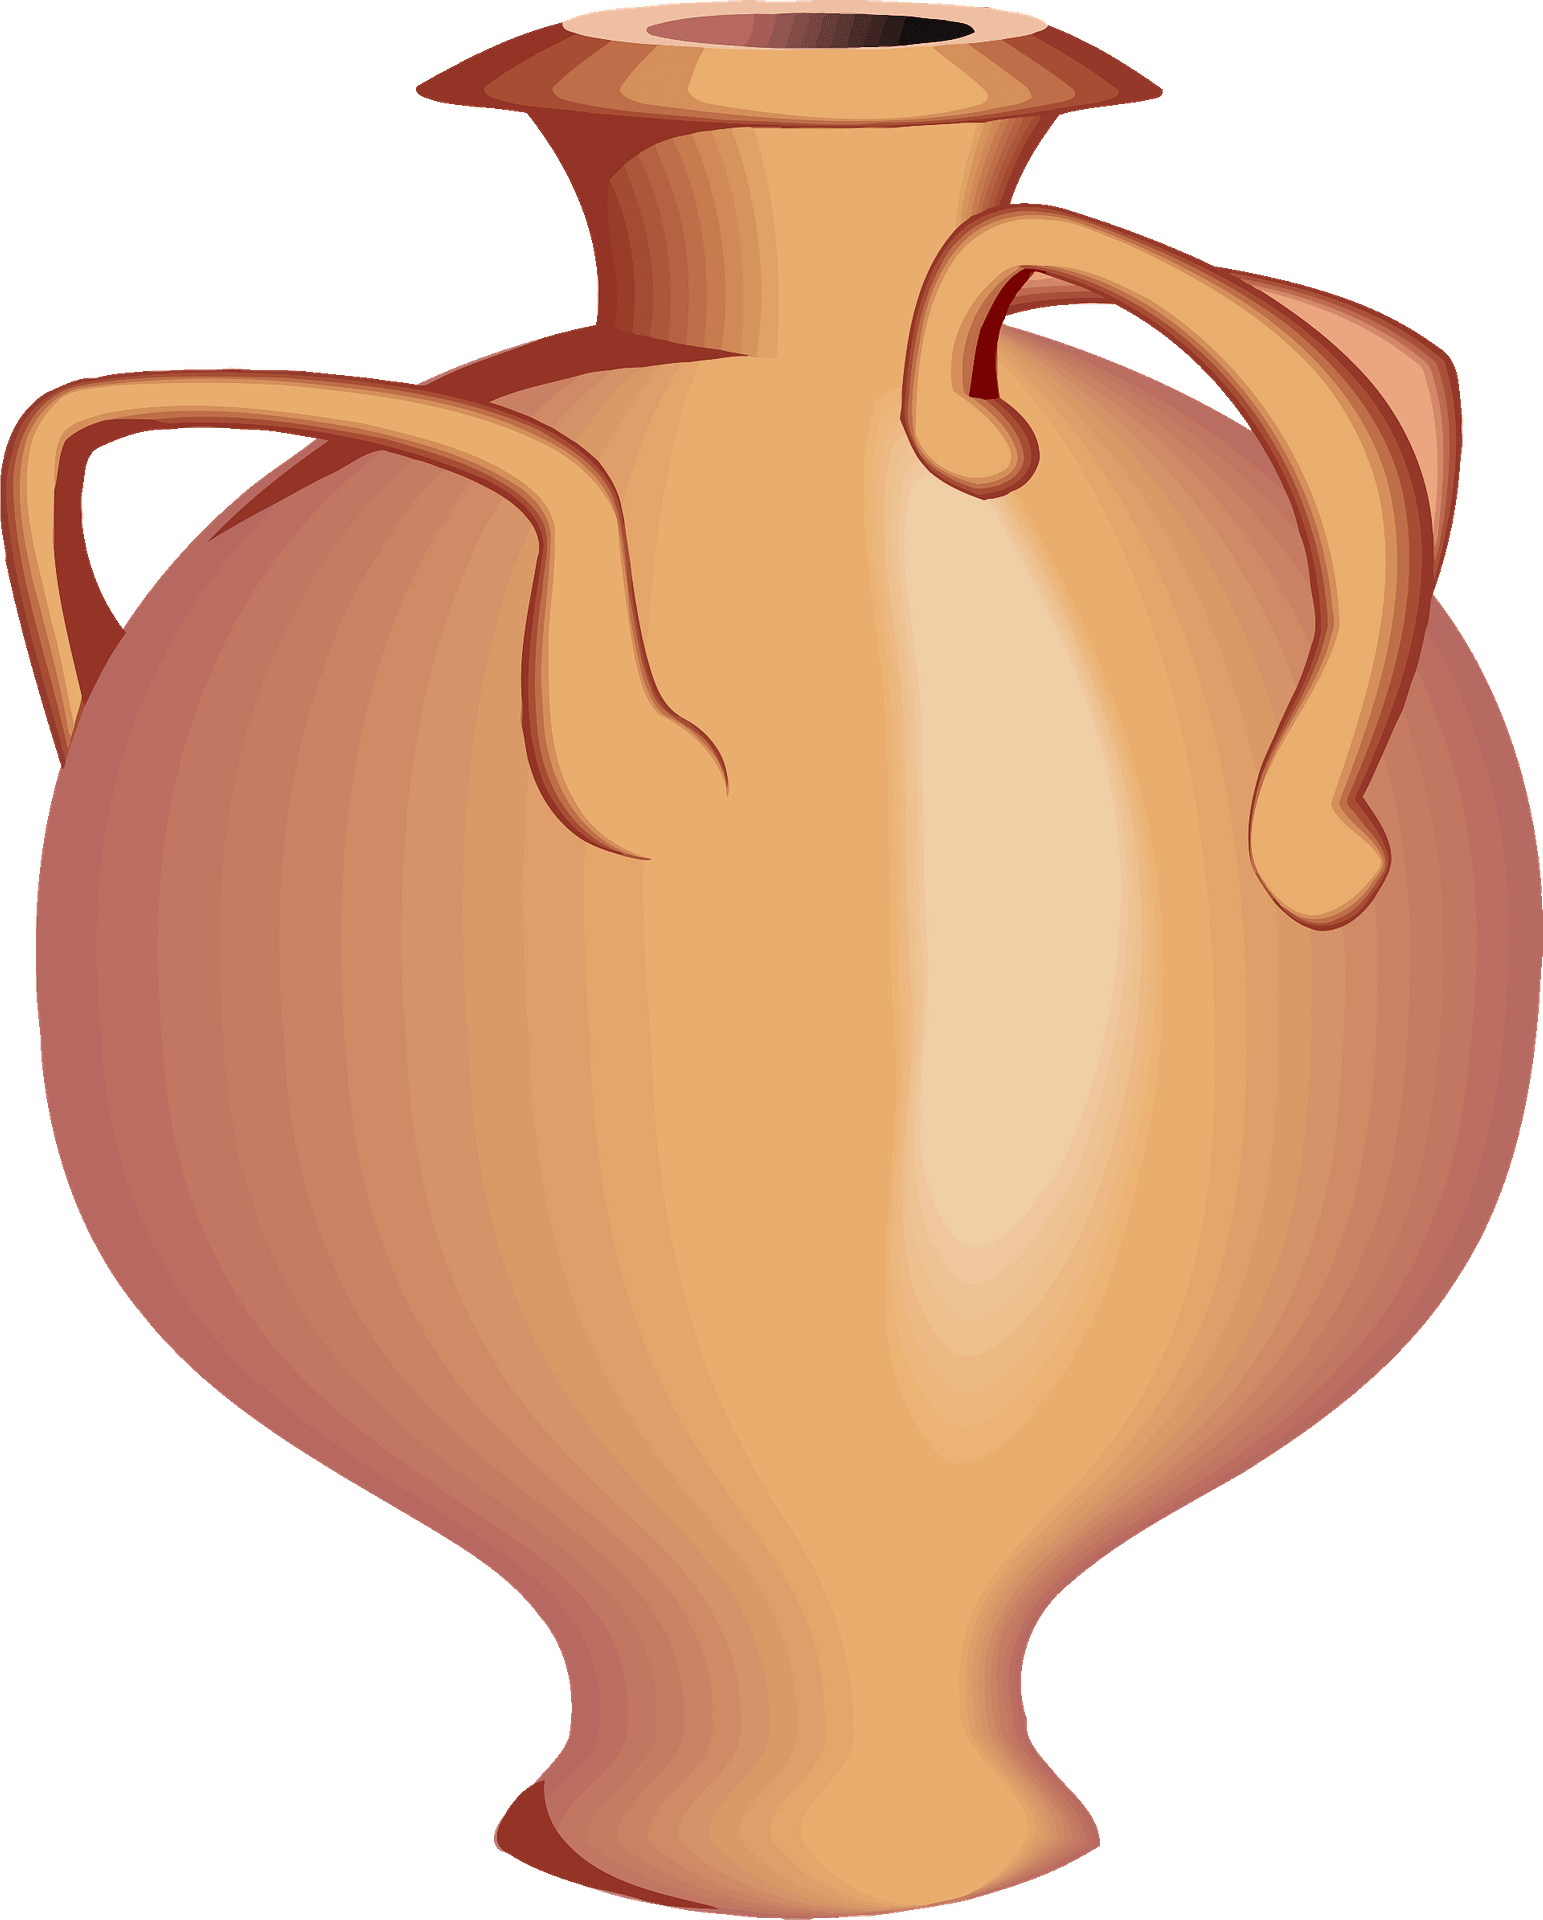 Ceramics Art PNG Pic Background